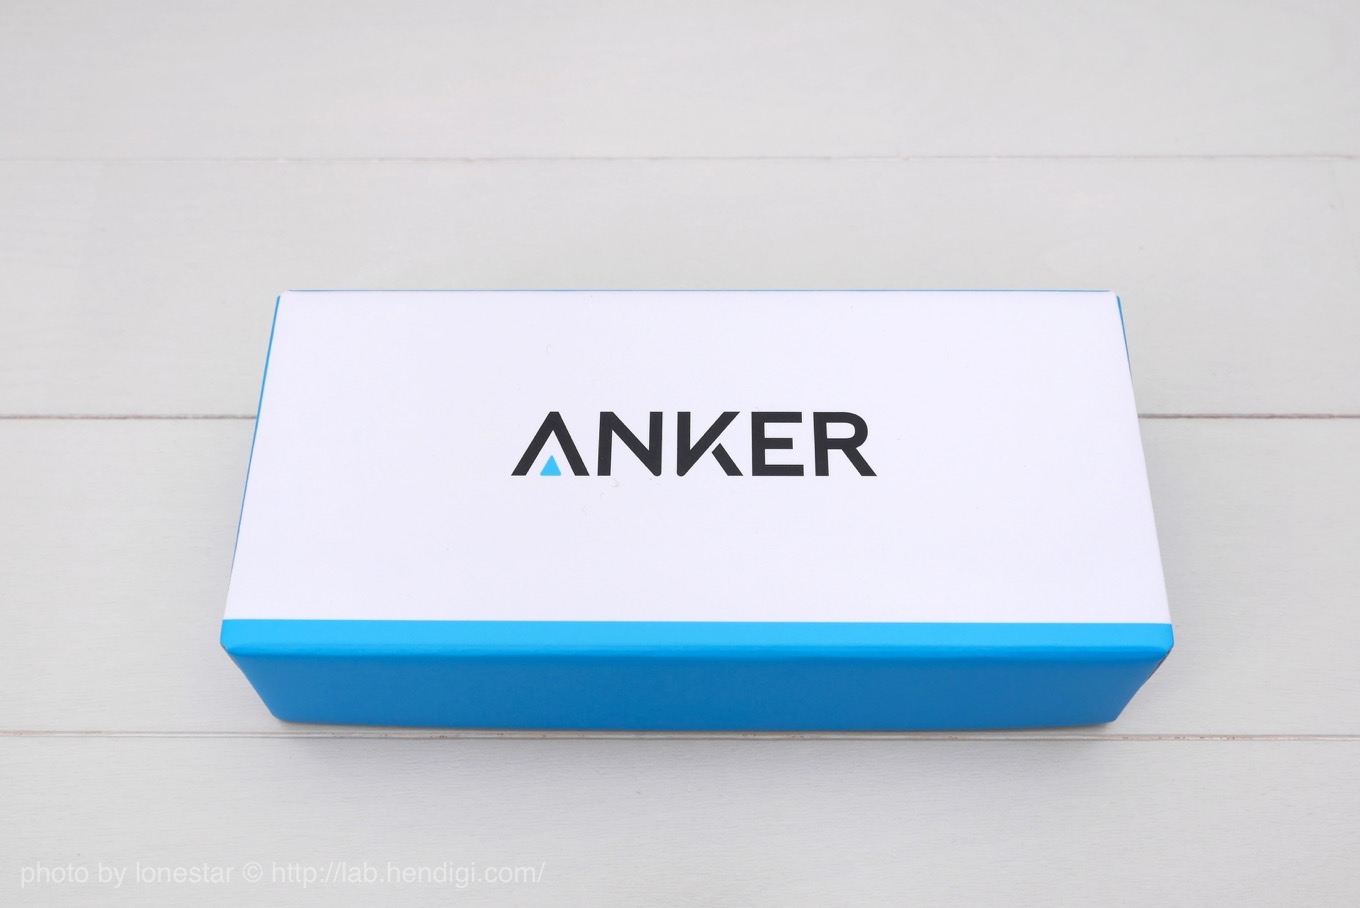 Anker PowerCore Fusion 5000